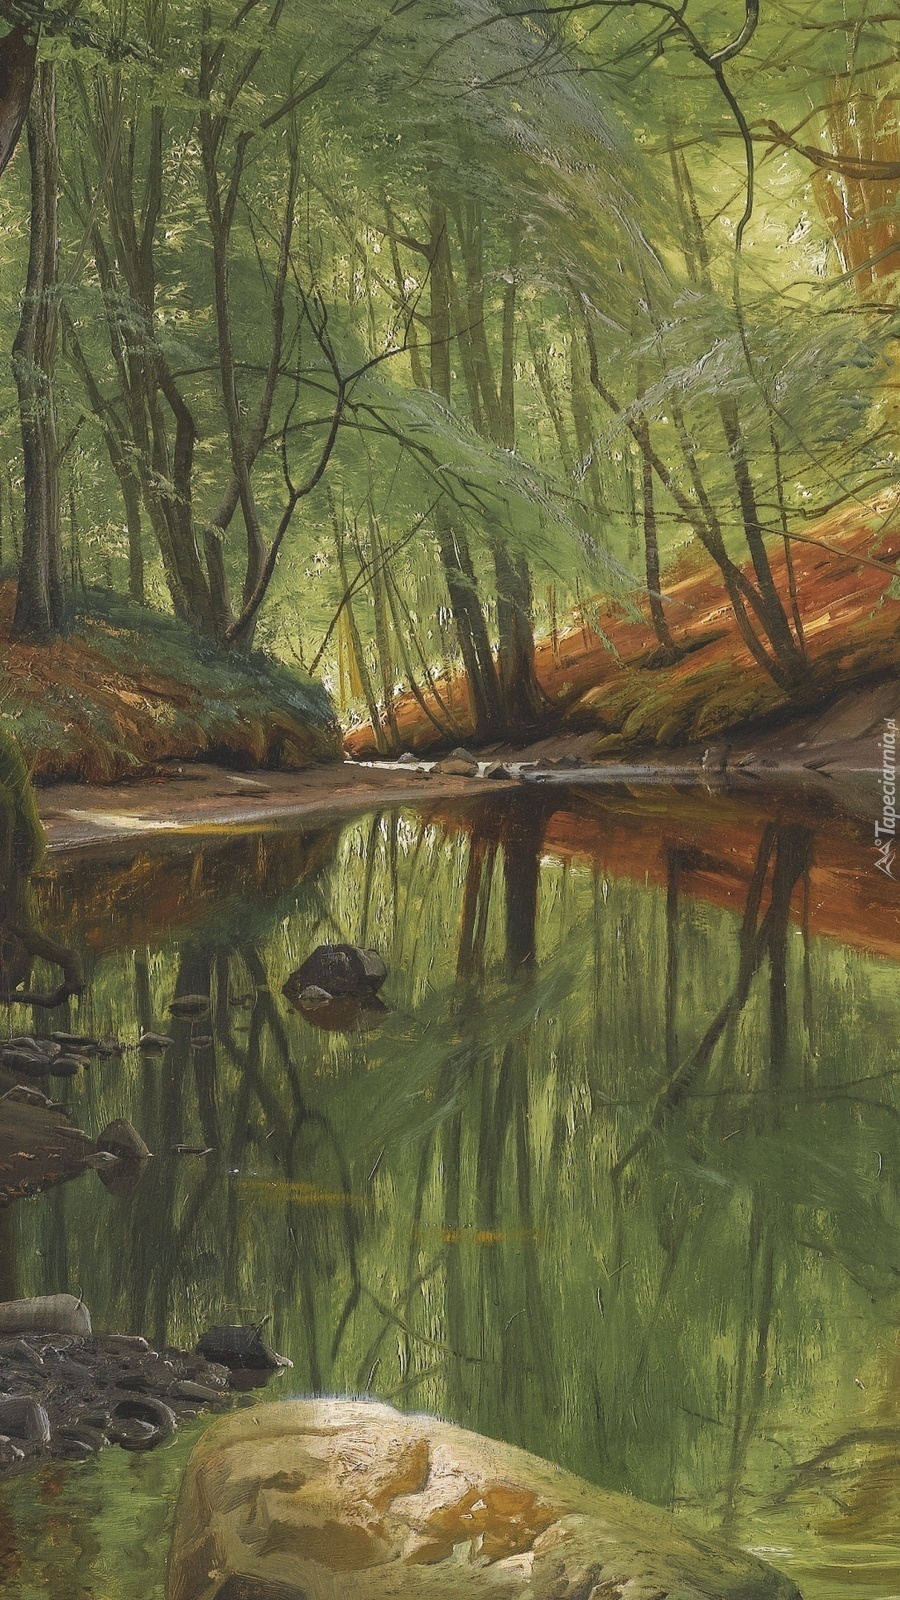 Rzeka w lesie na obrazie Pedera Morka Monsteda